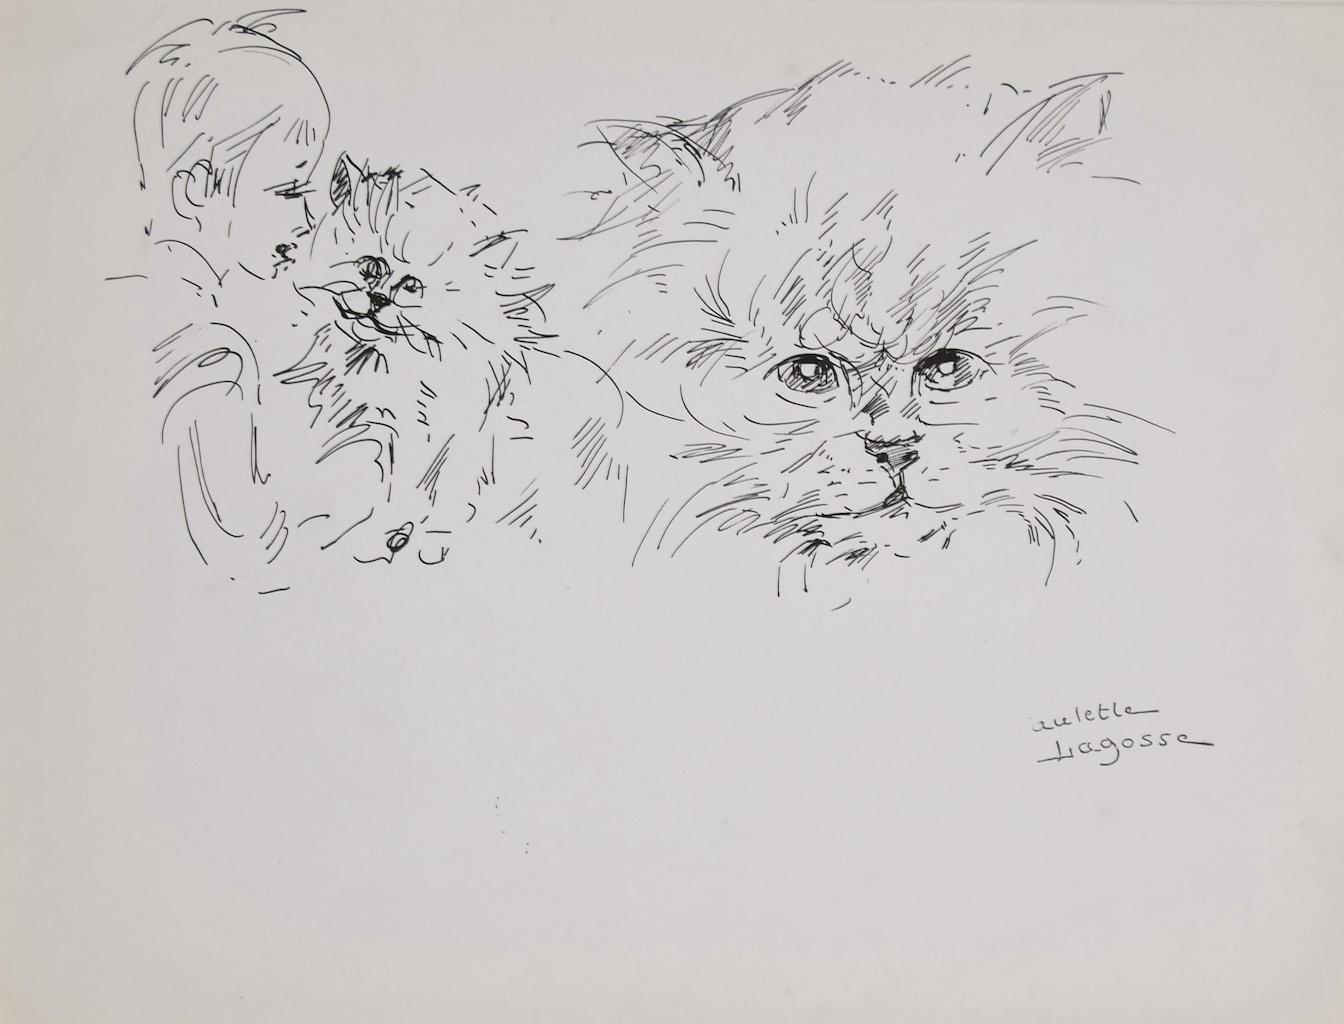 Marie Paulette Lagosse Figurative Art - The Cat and Child - Original Pen on Paper by M. P. Lagosse - 1970s